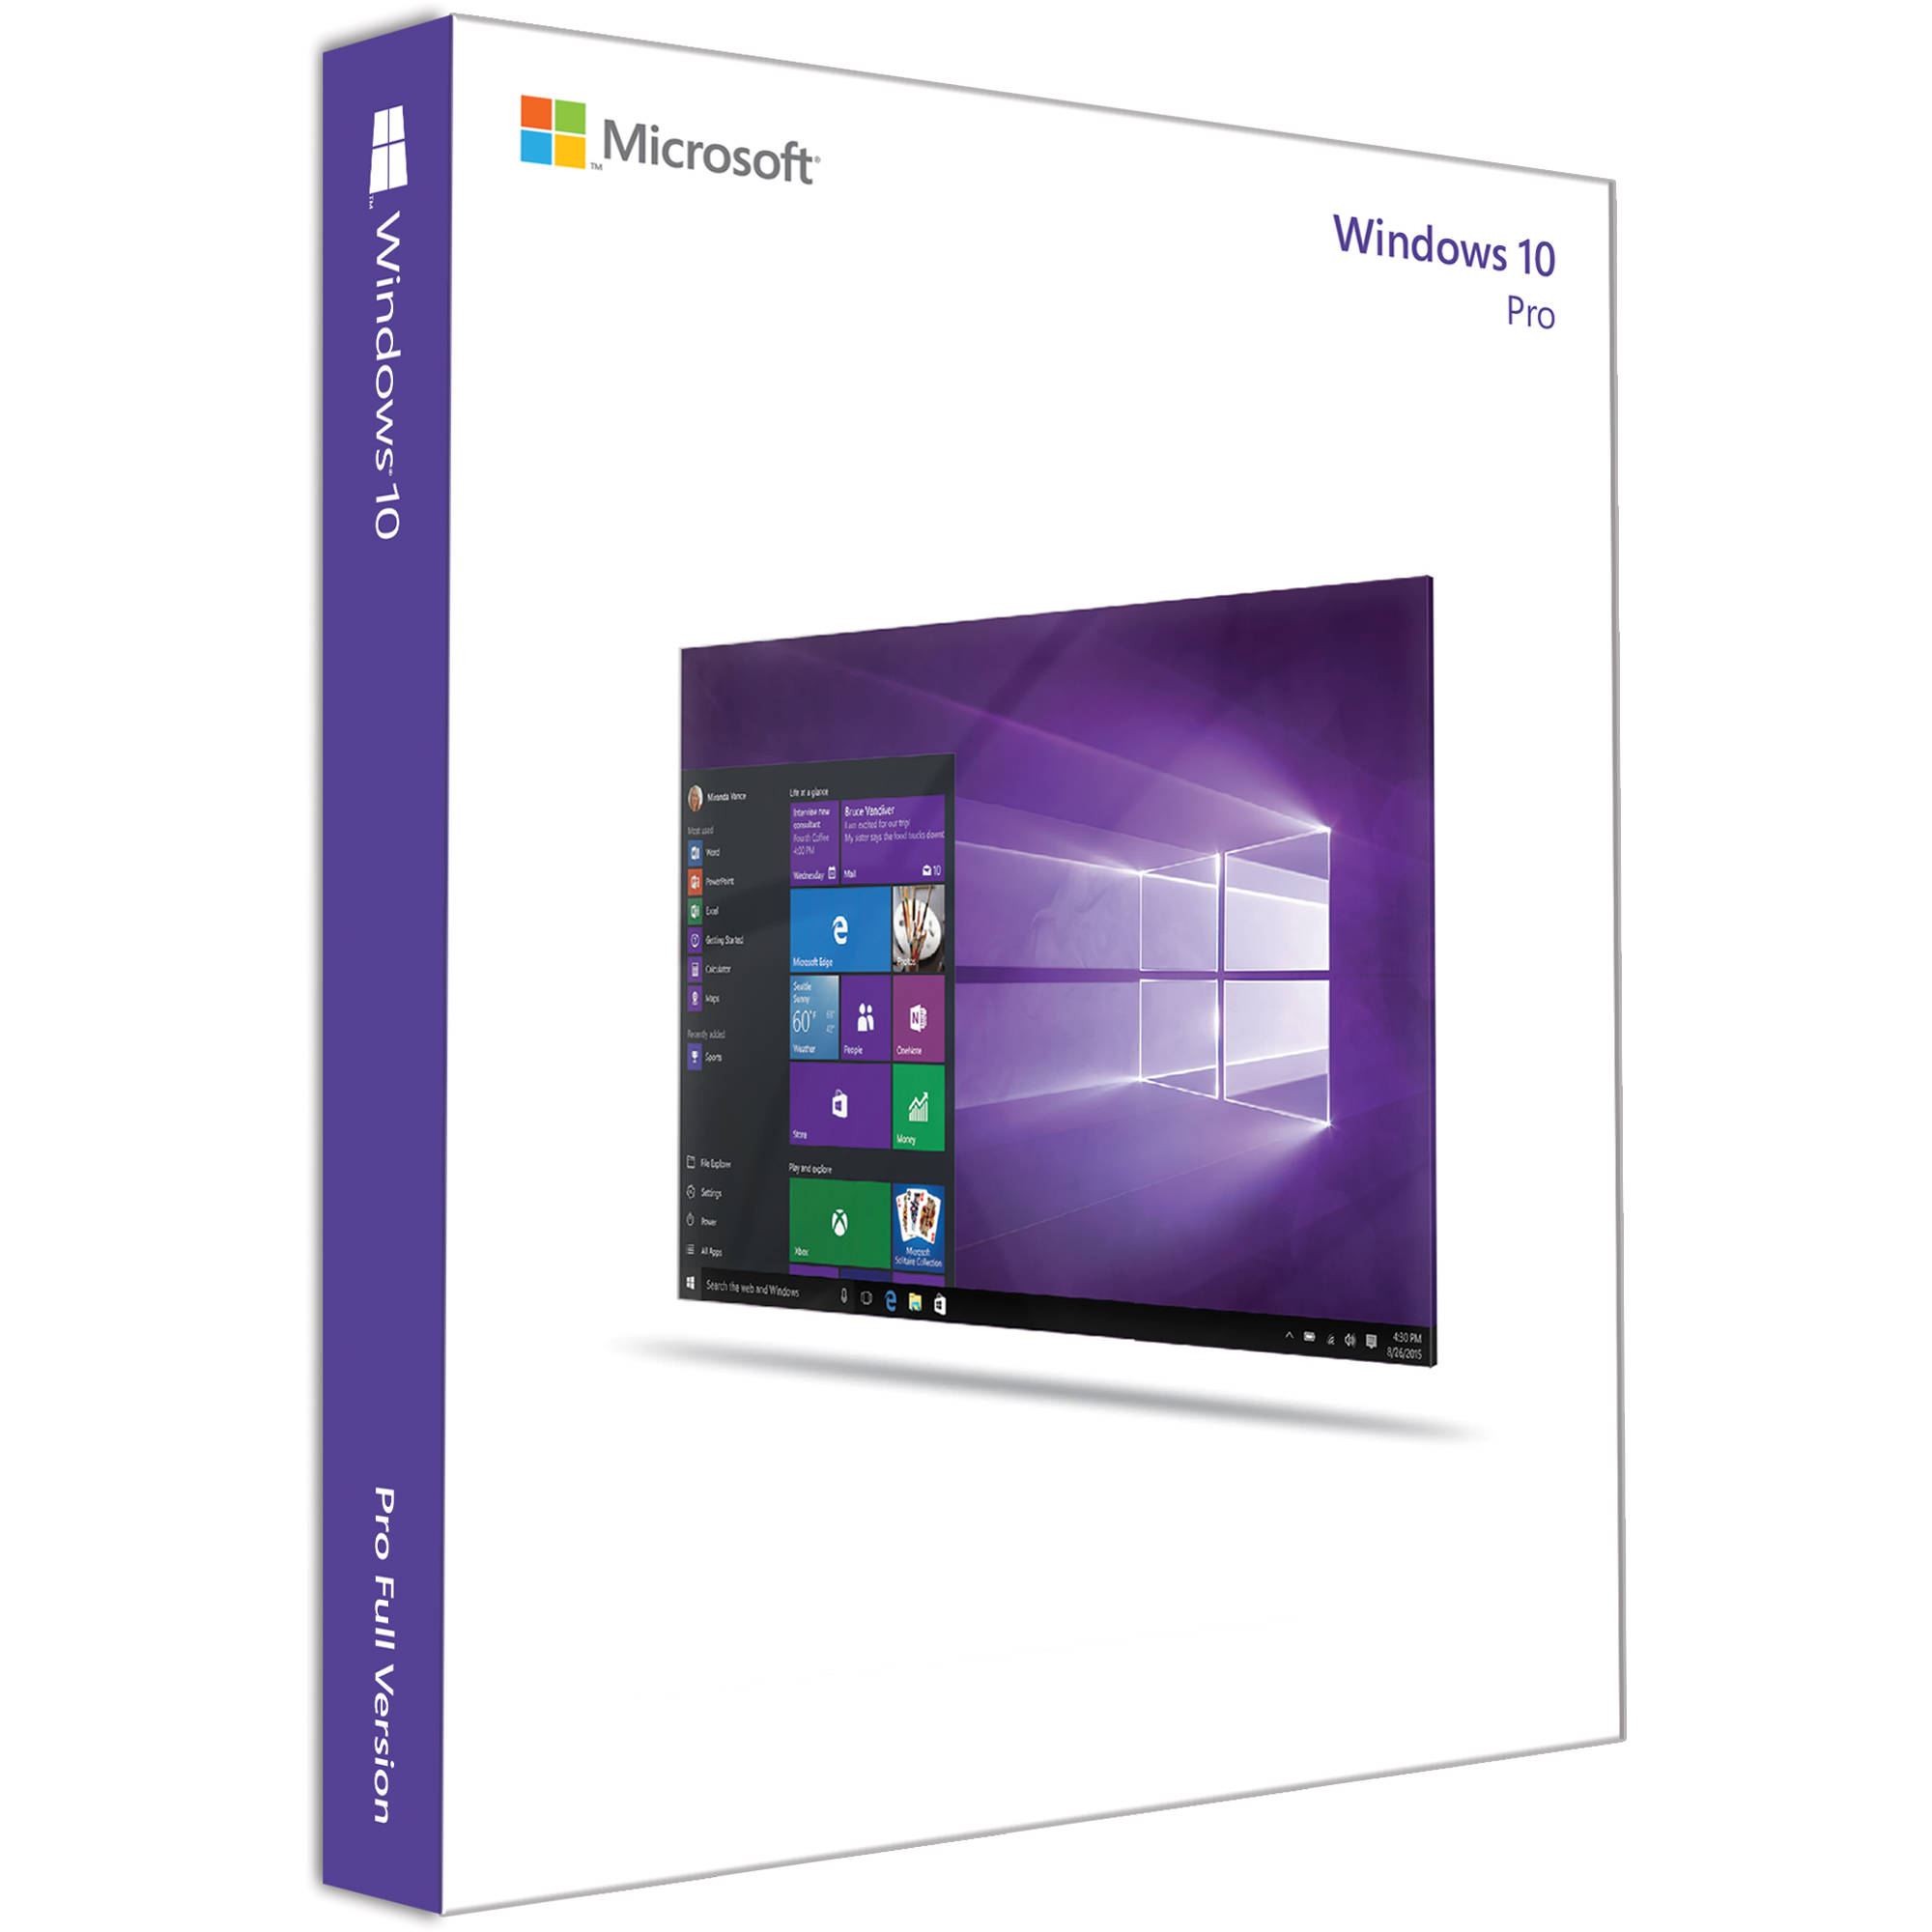 Microsoft Windows 10 Pro 32 Bit Oem Dvd Fqc 08970 B H Photo